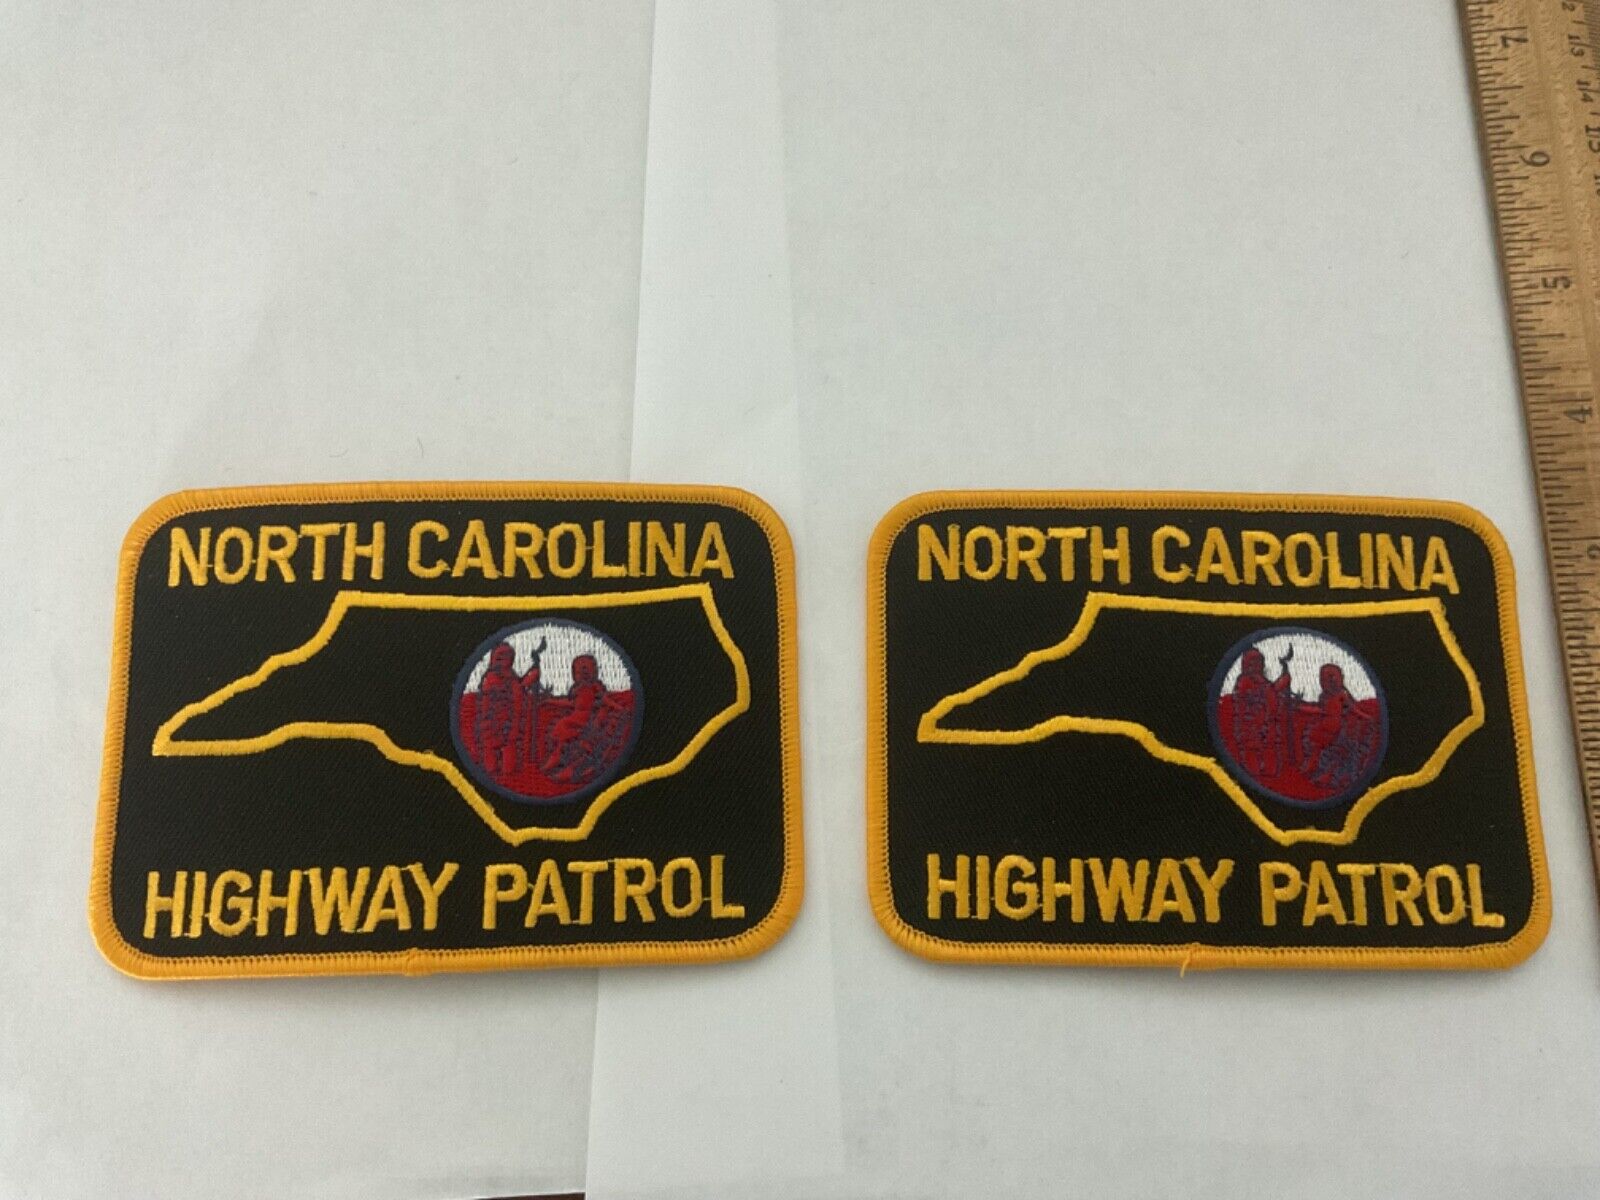 North Carolina Highway Patrol collectable Patch Set 2 pieces